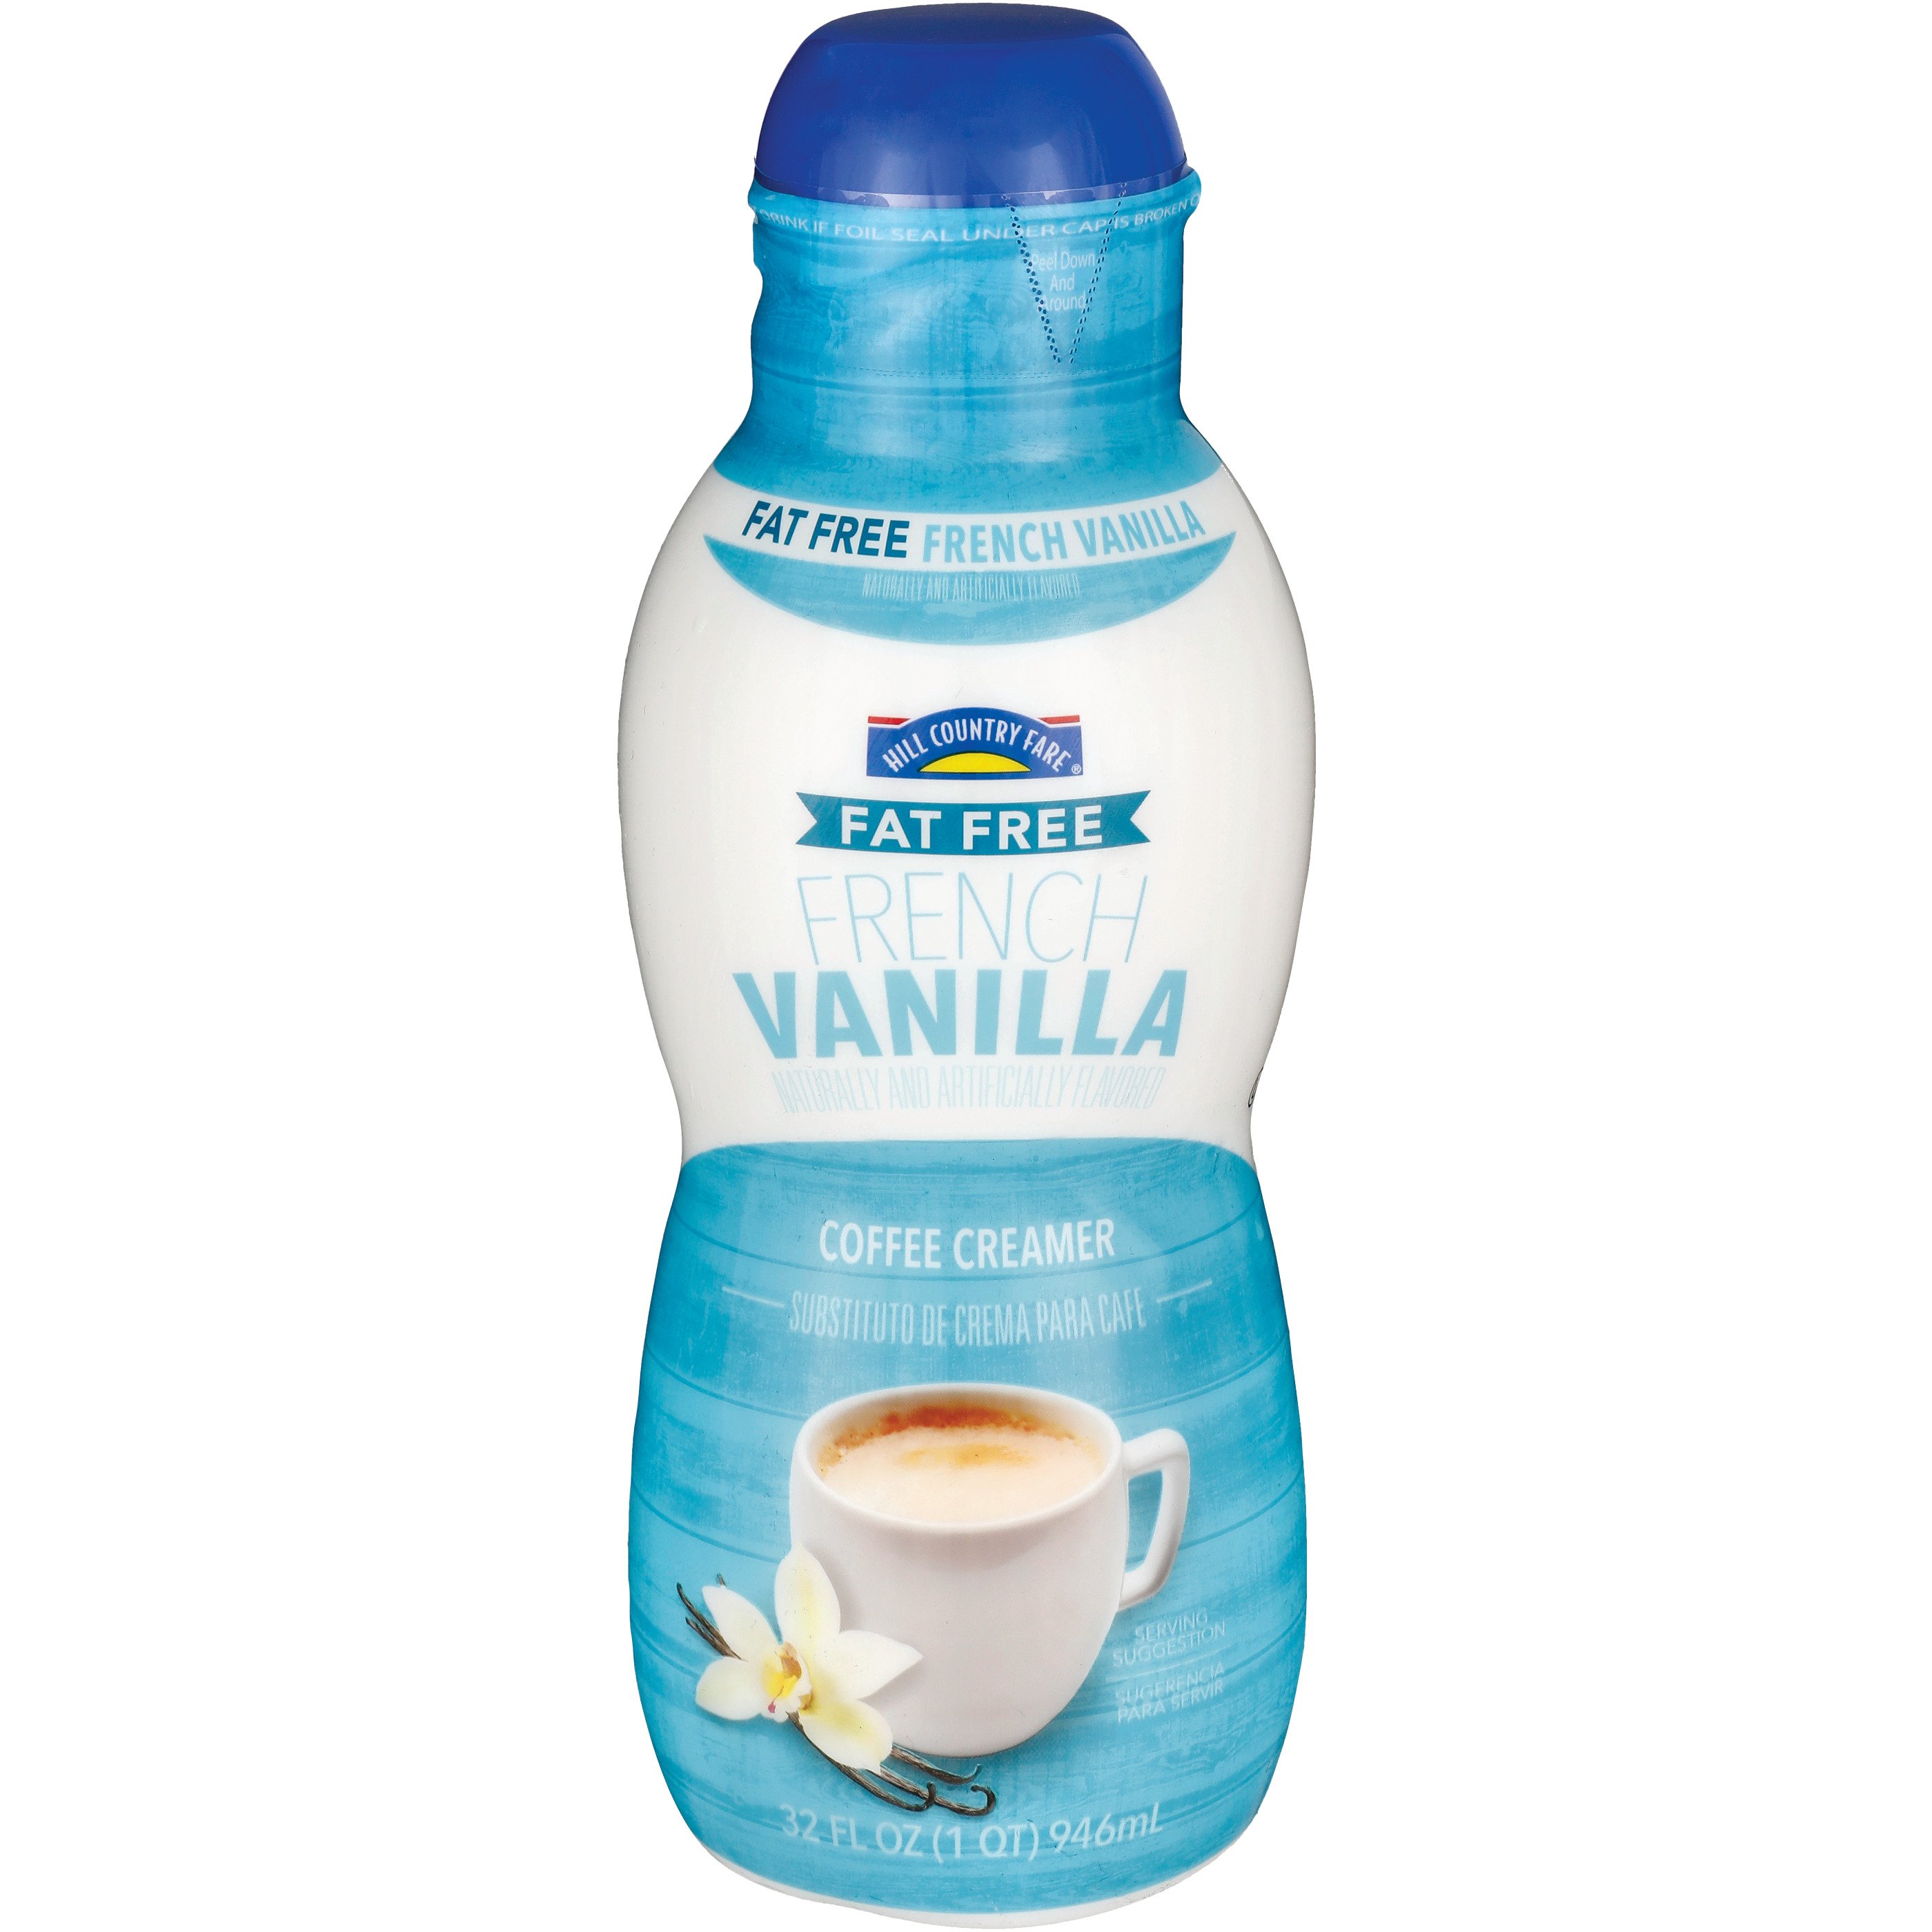 French Vanilla Flavored Coffee Creamer 32 oz.